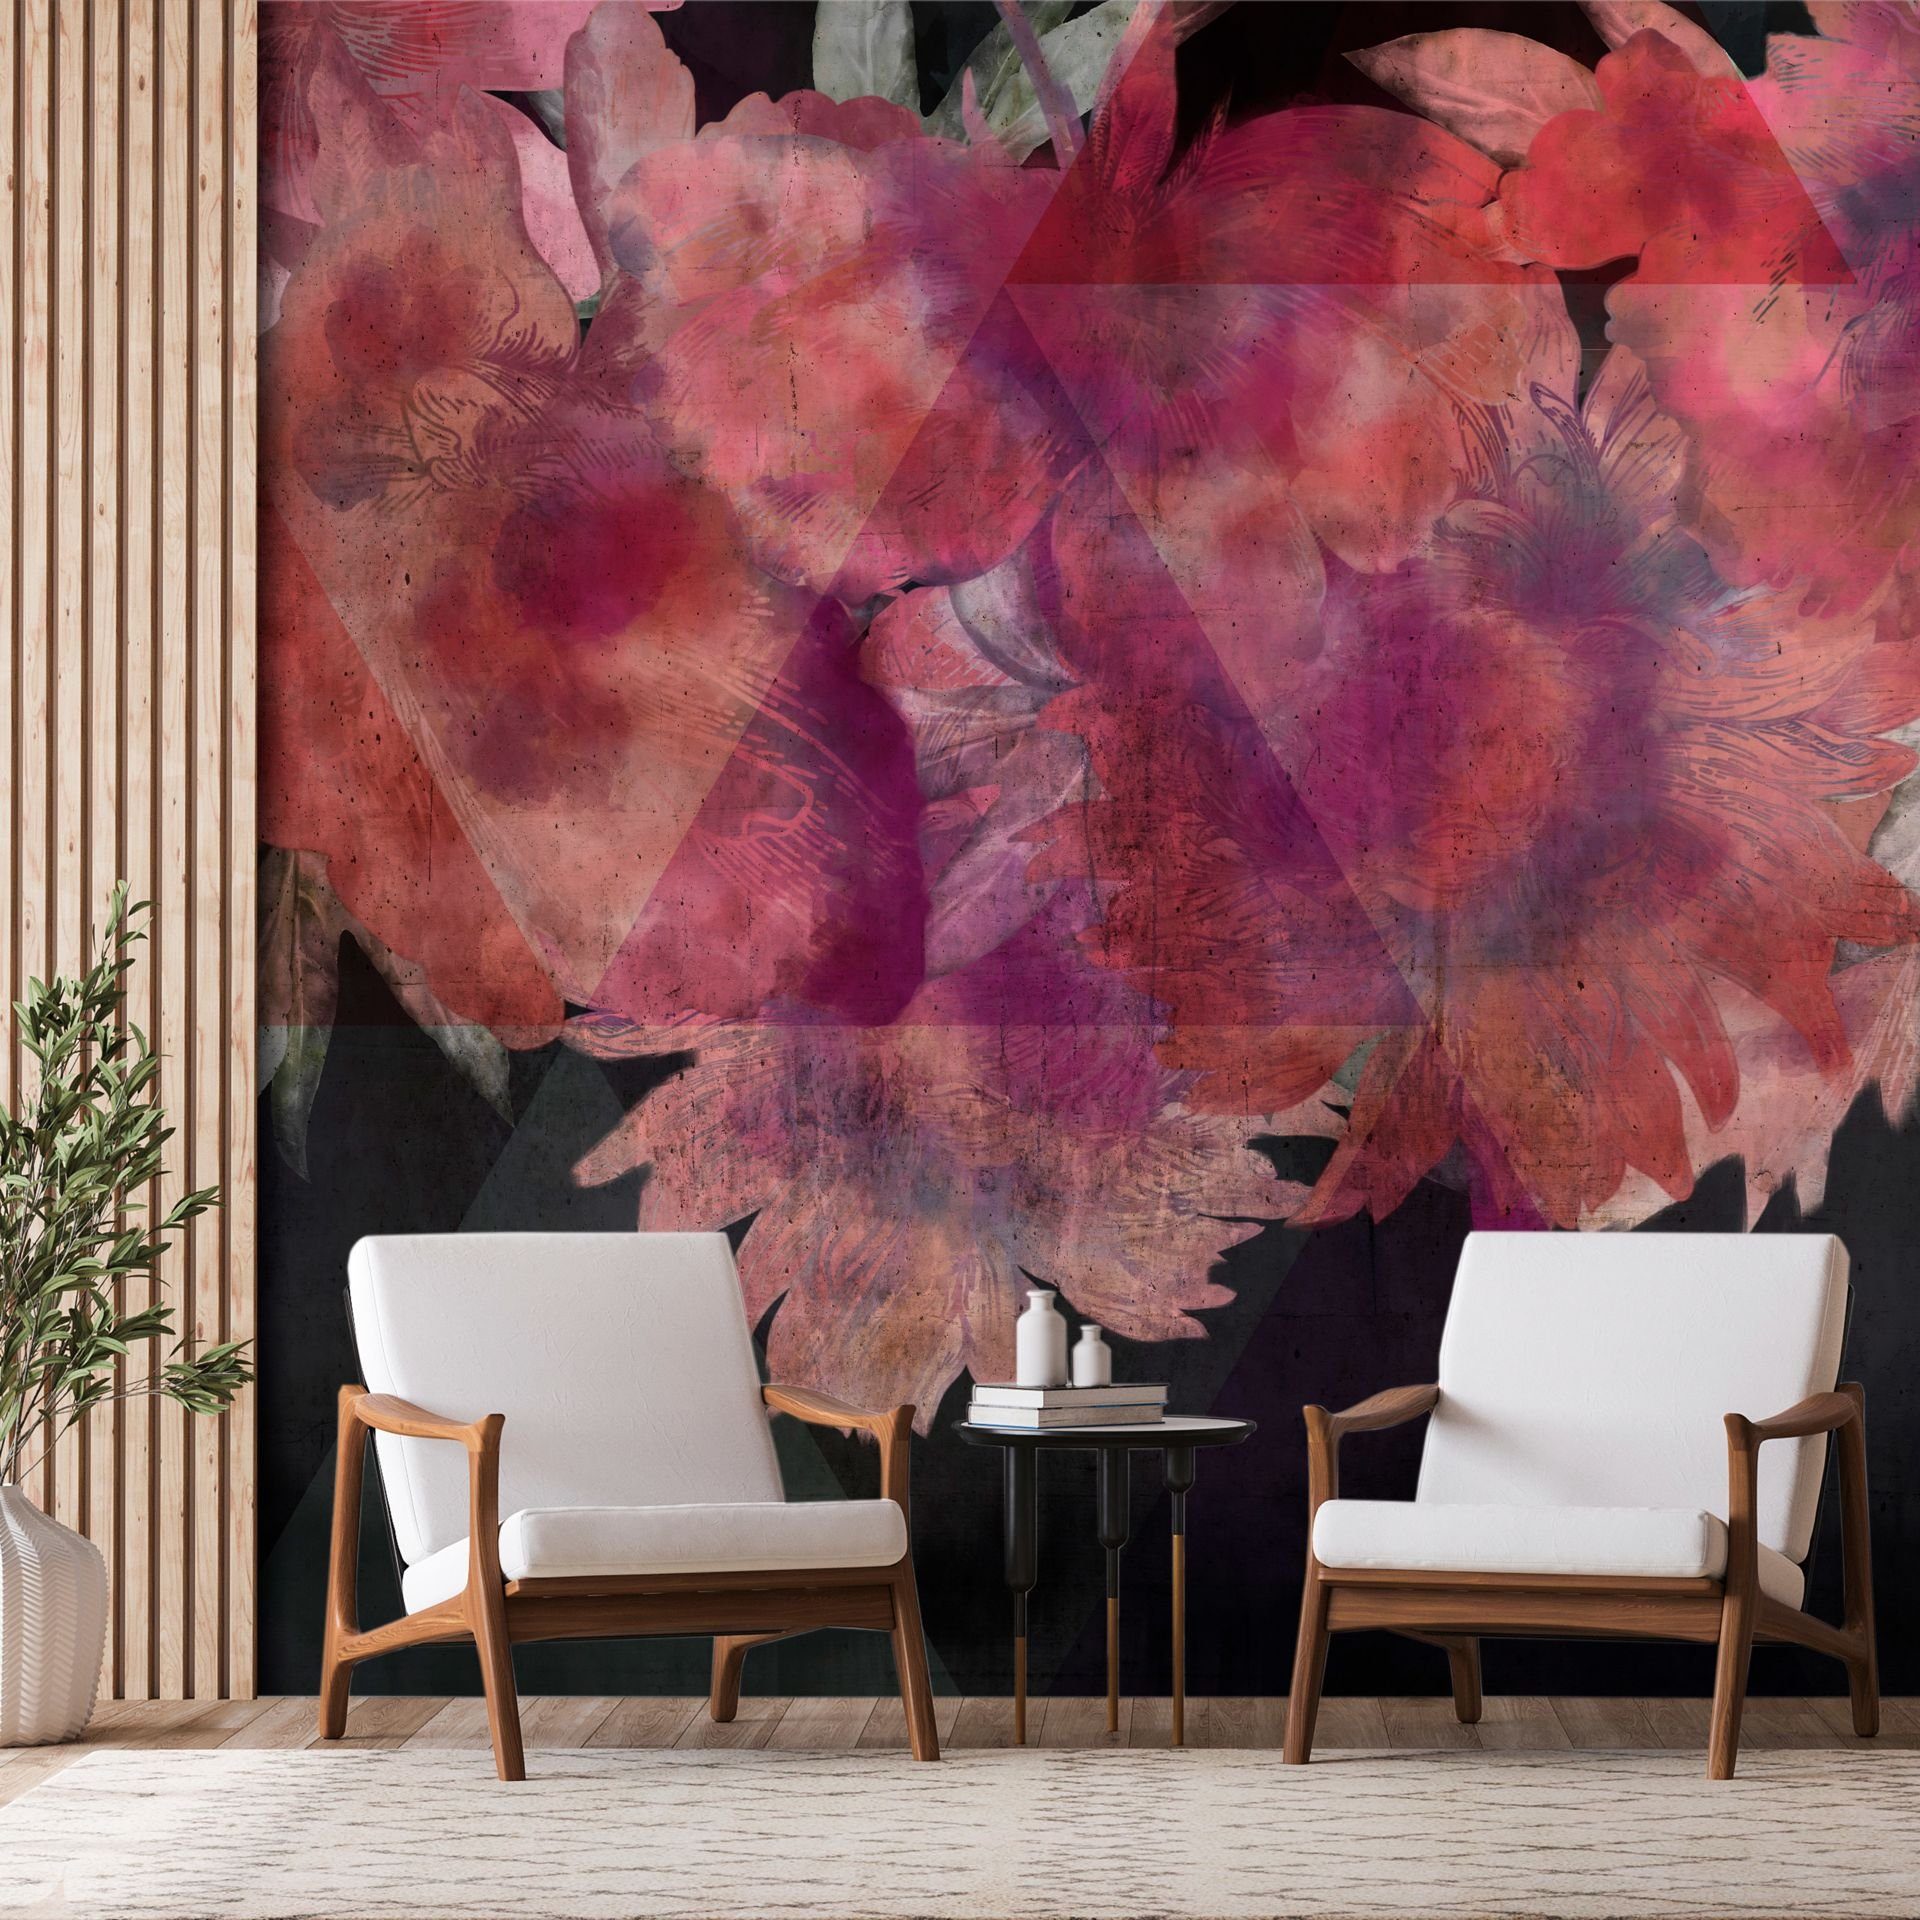 KUNSTLOFT Vliestapete Romantic Flowers 0.98x0.7 m, halb-matt, matt, lichtbeständige Design Tapete